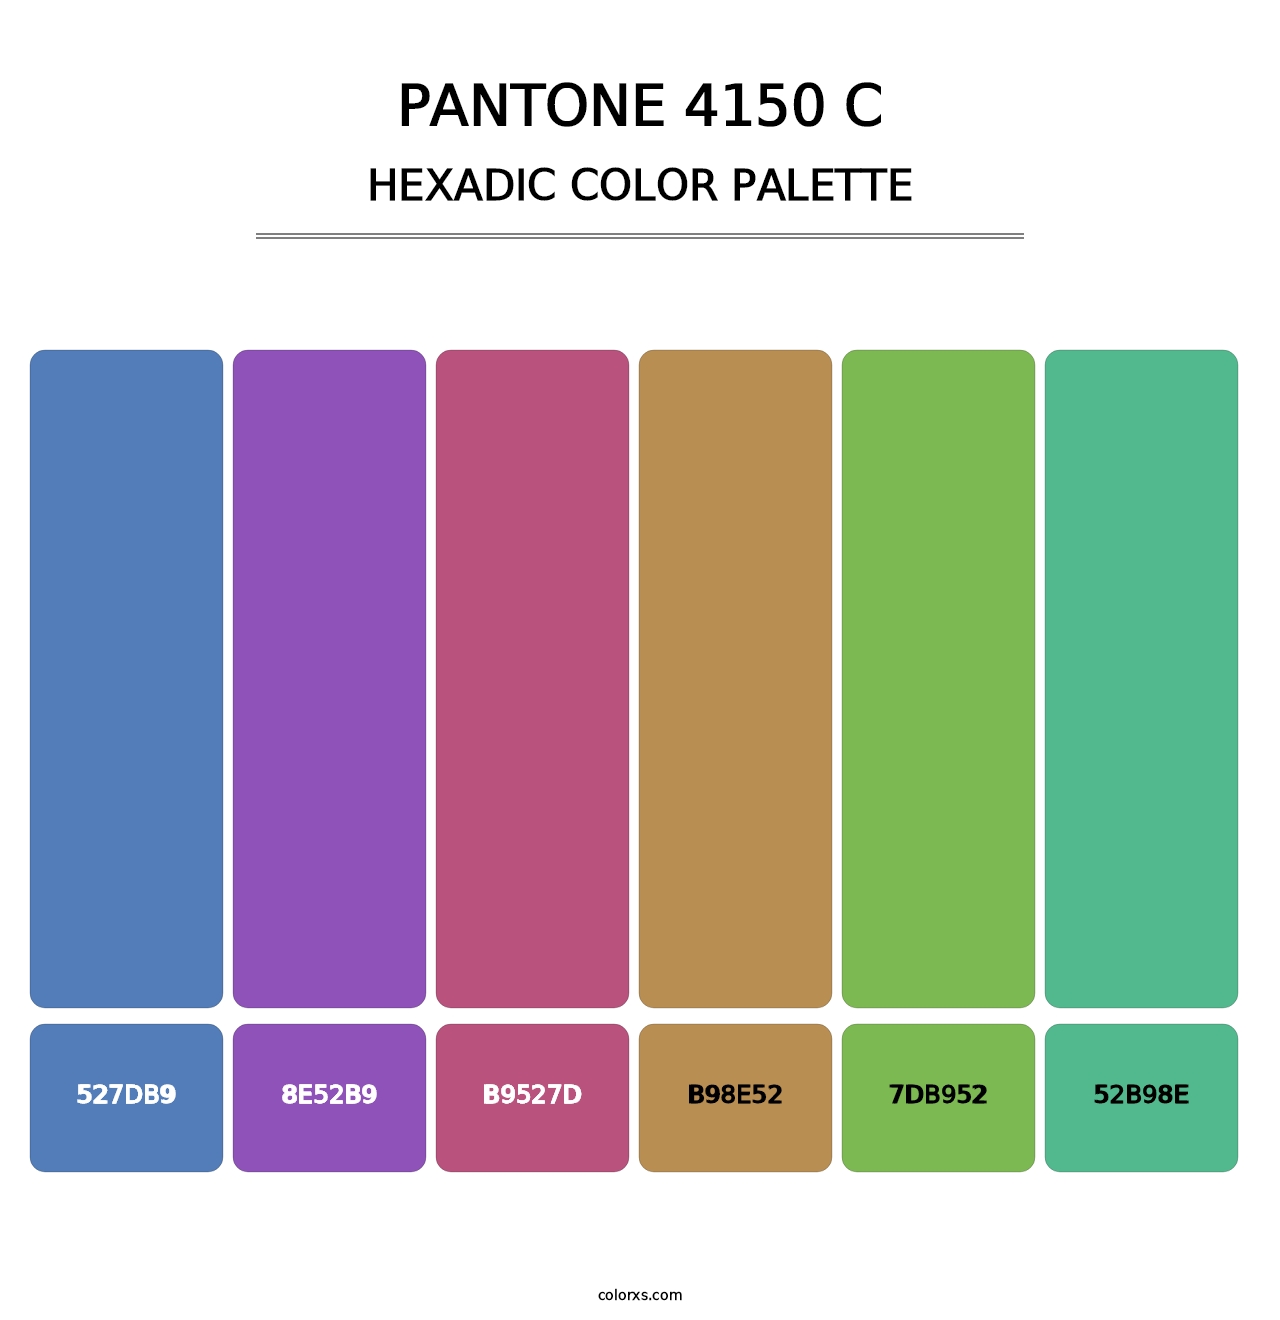 PANTONE 4150 C - Hexadic Color Palette